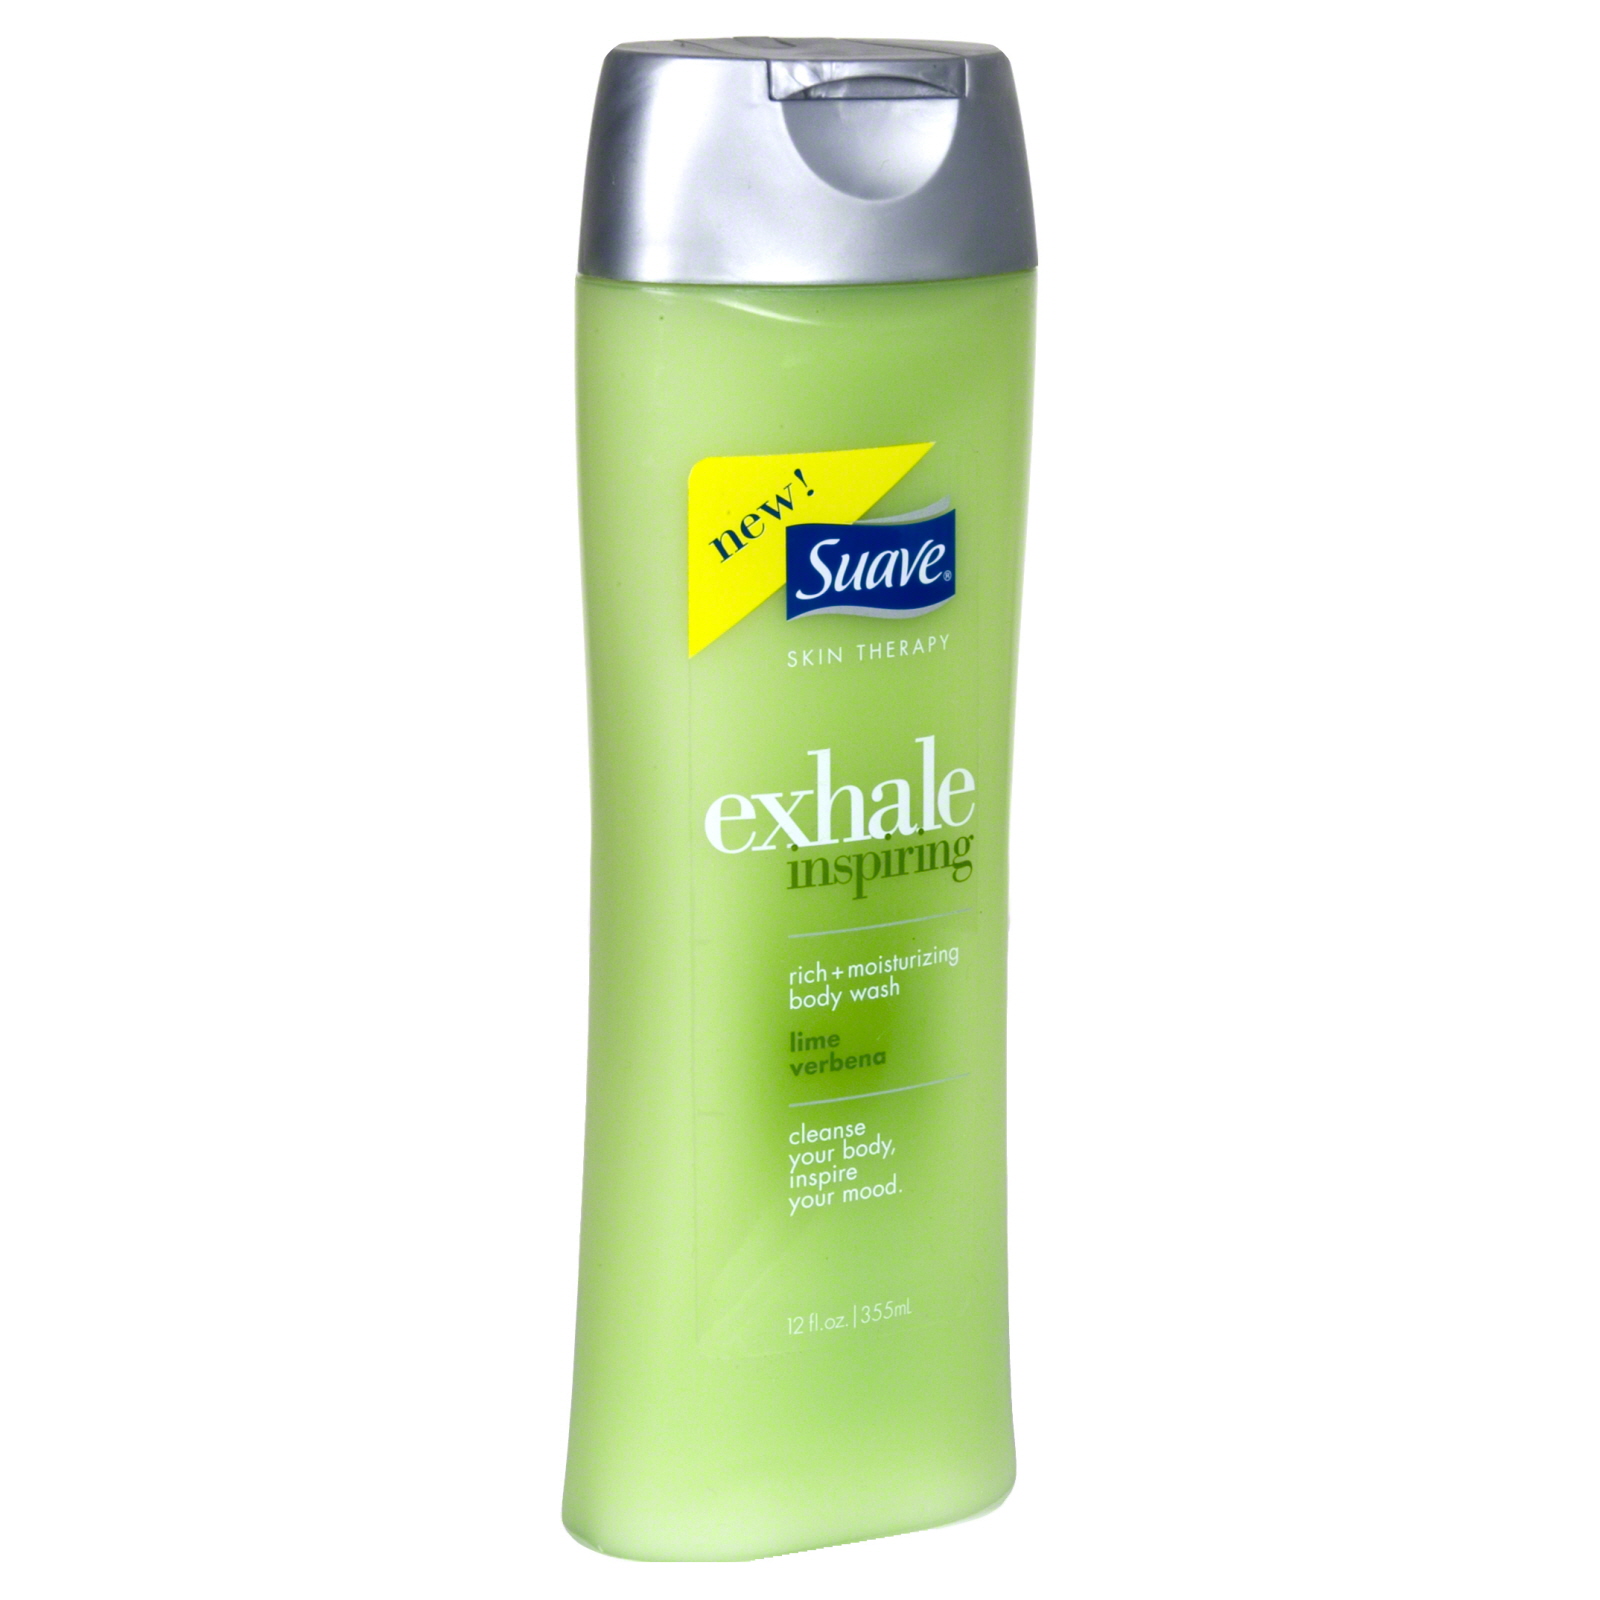 Suave Skin Therapy Body Wash, Exhale, Inspiring, Lime Verbena, 12 fl oz (355 ml)